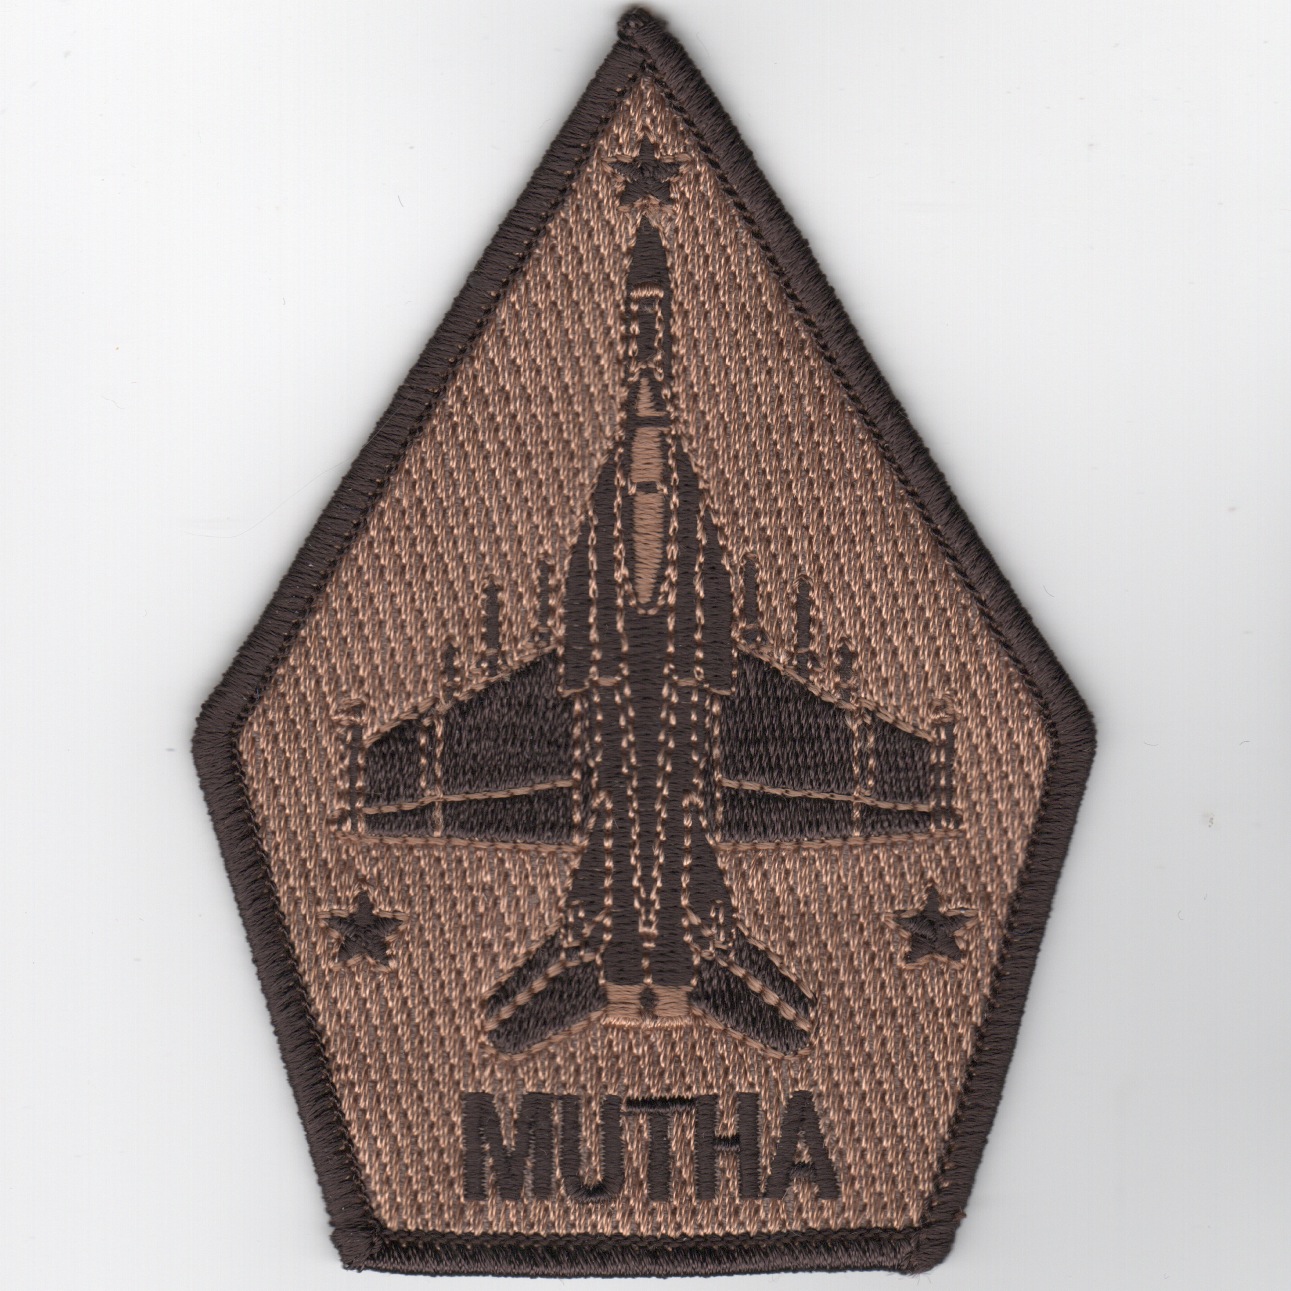 VFA-213 A/C 'Coffin' Patch (MUTHA-Des)